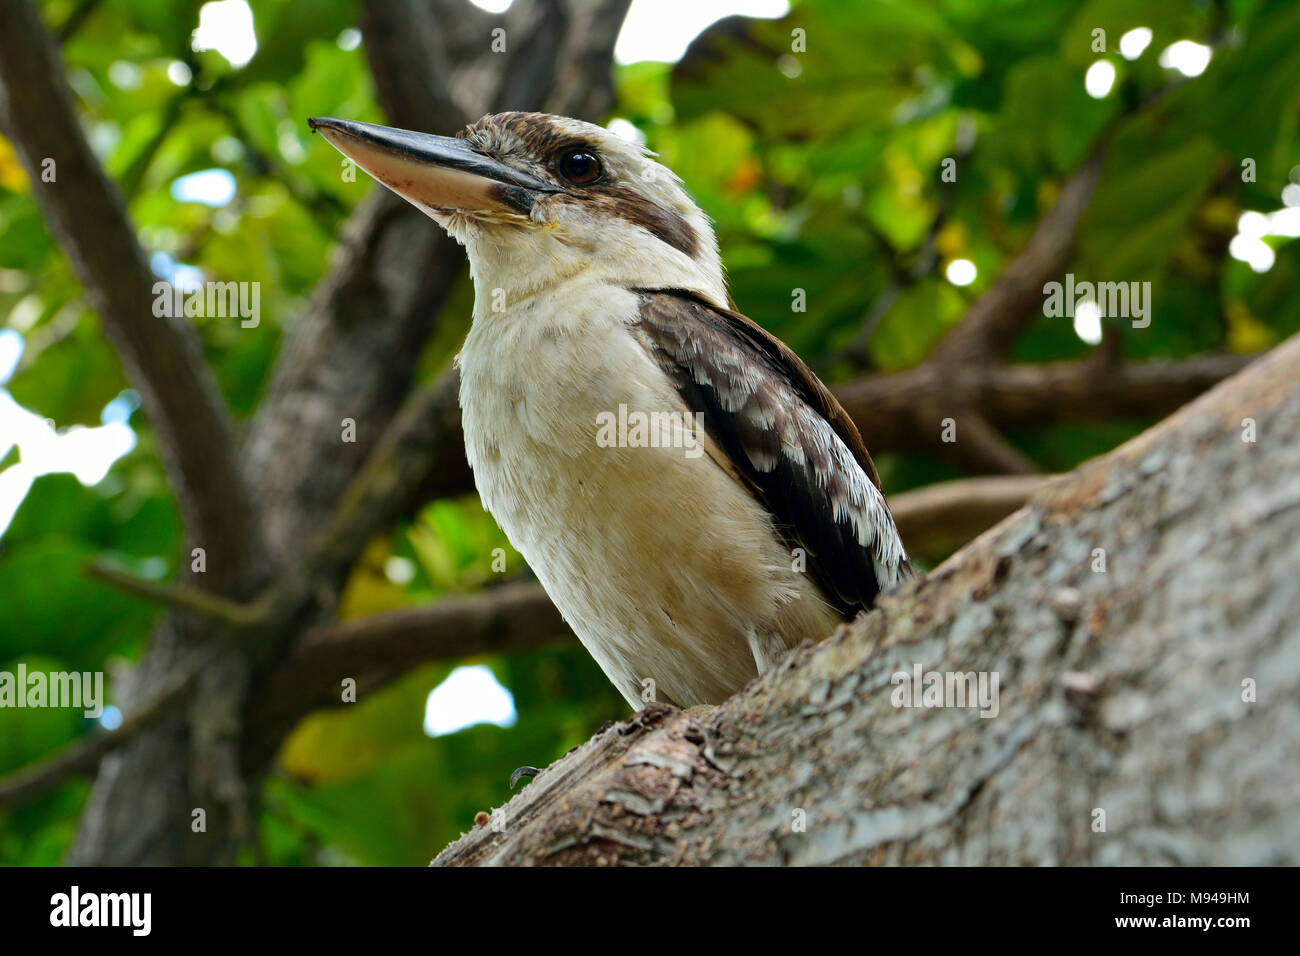 Kookaburra (Genus Dacelo) on a tree branch in Australia. Stock Photo